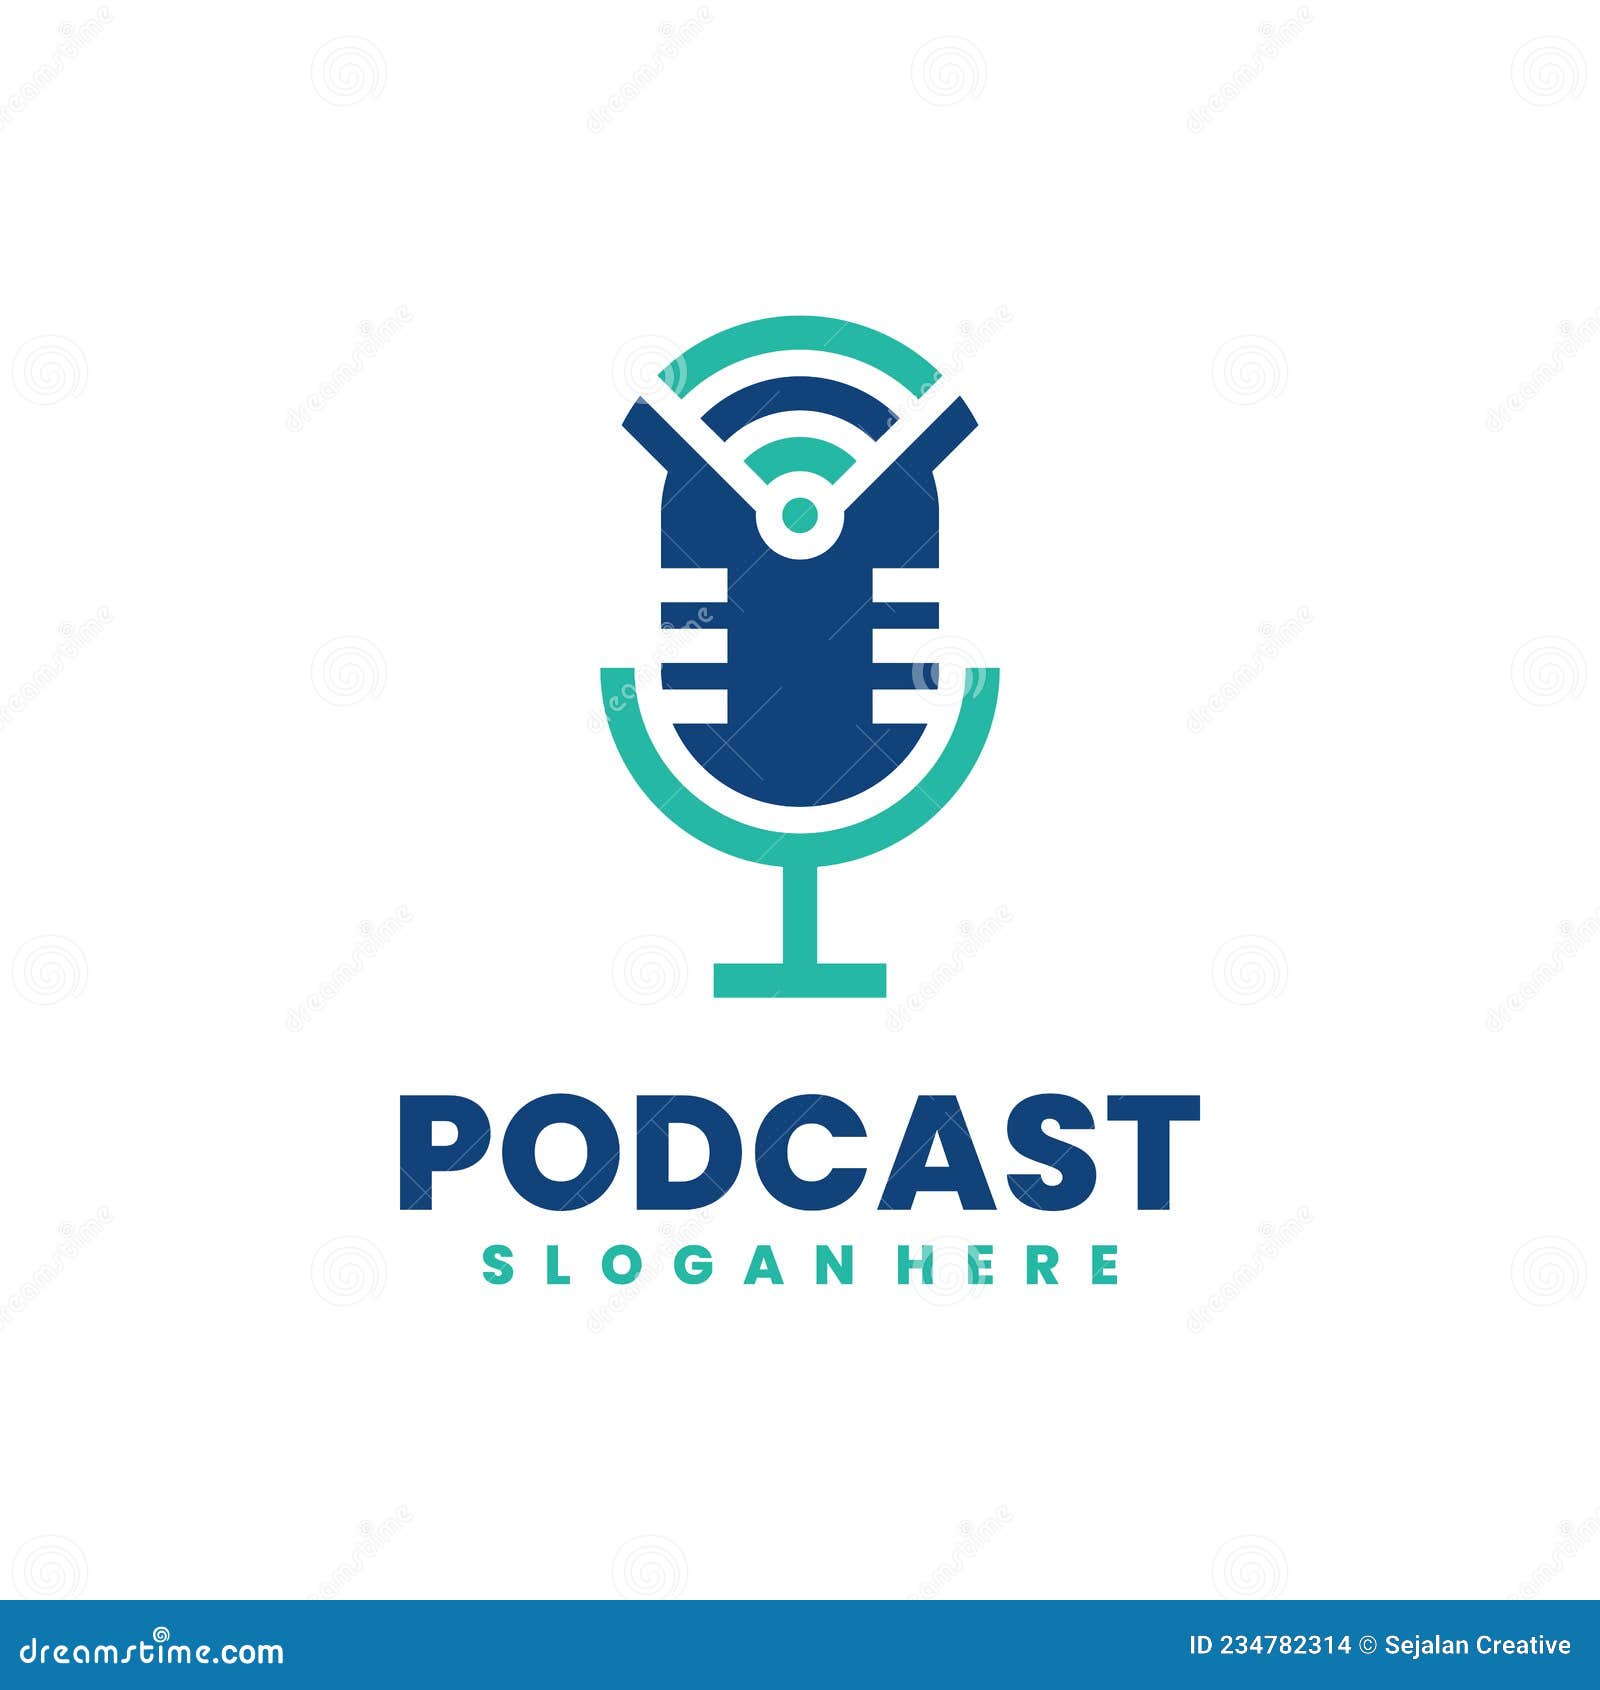 A minimalist podcast logo stock vector. Illustration of communication ...